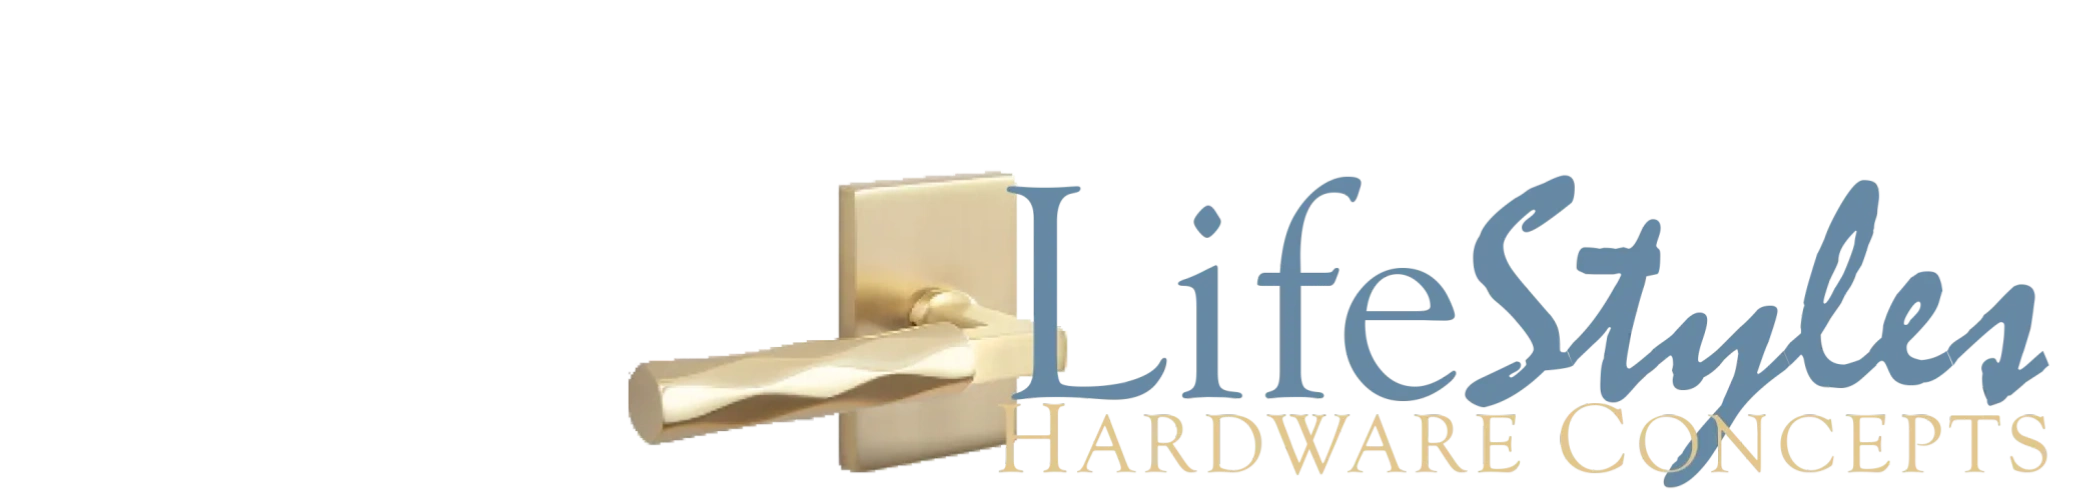 LifeStyles Hardware Concepts in Edmond